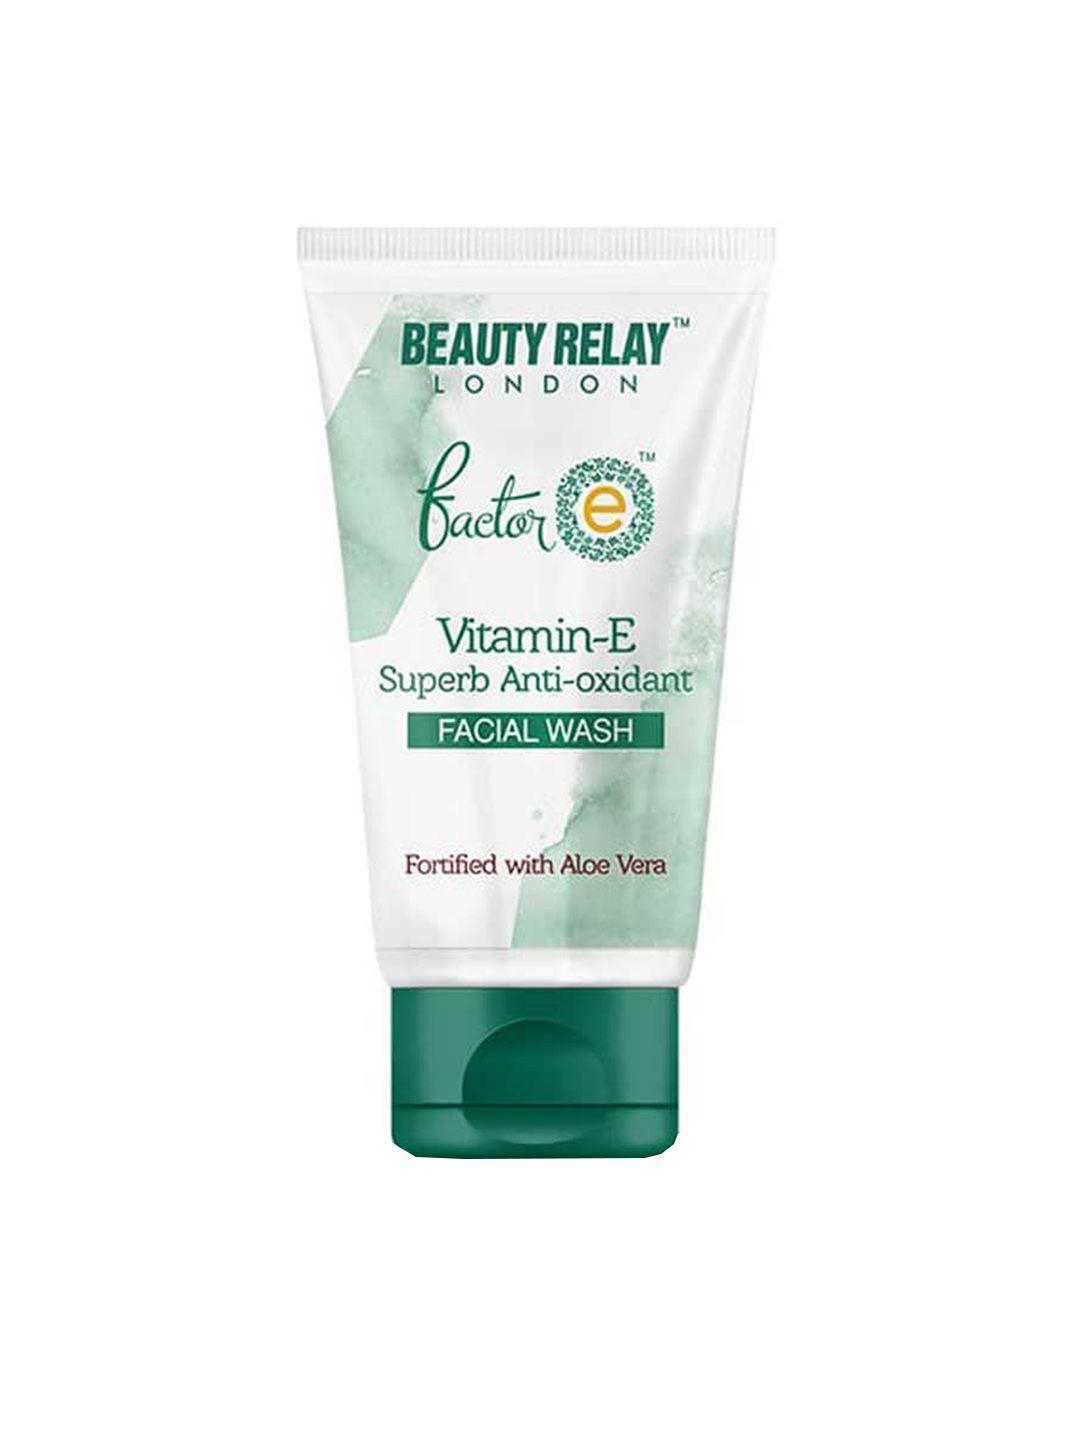 beautyrelay london factor e vitamin-e superb anti-oxidant face wash with aloevera - 165 g